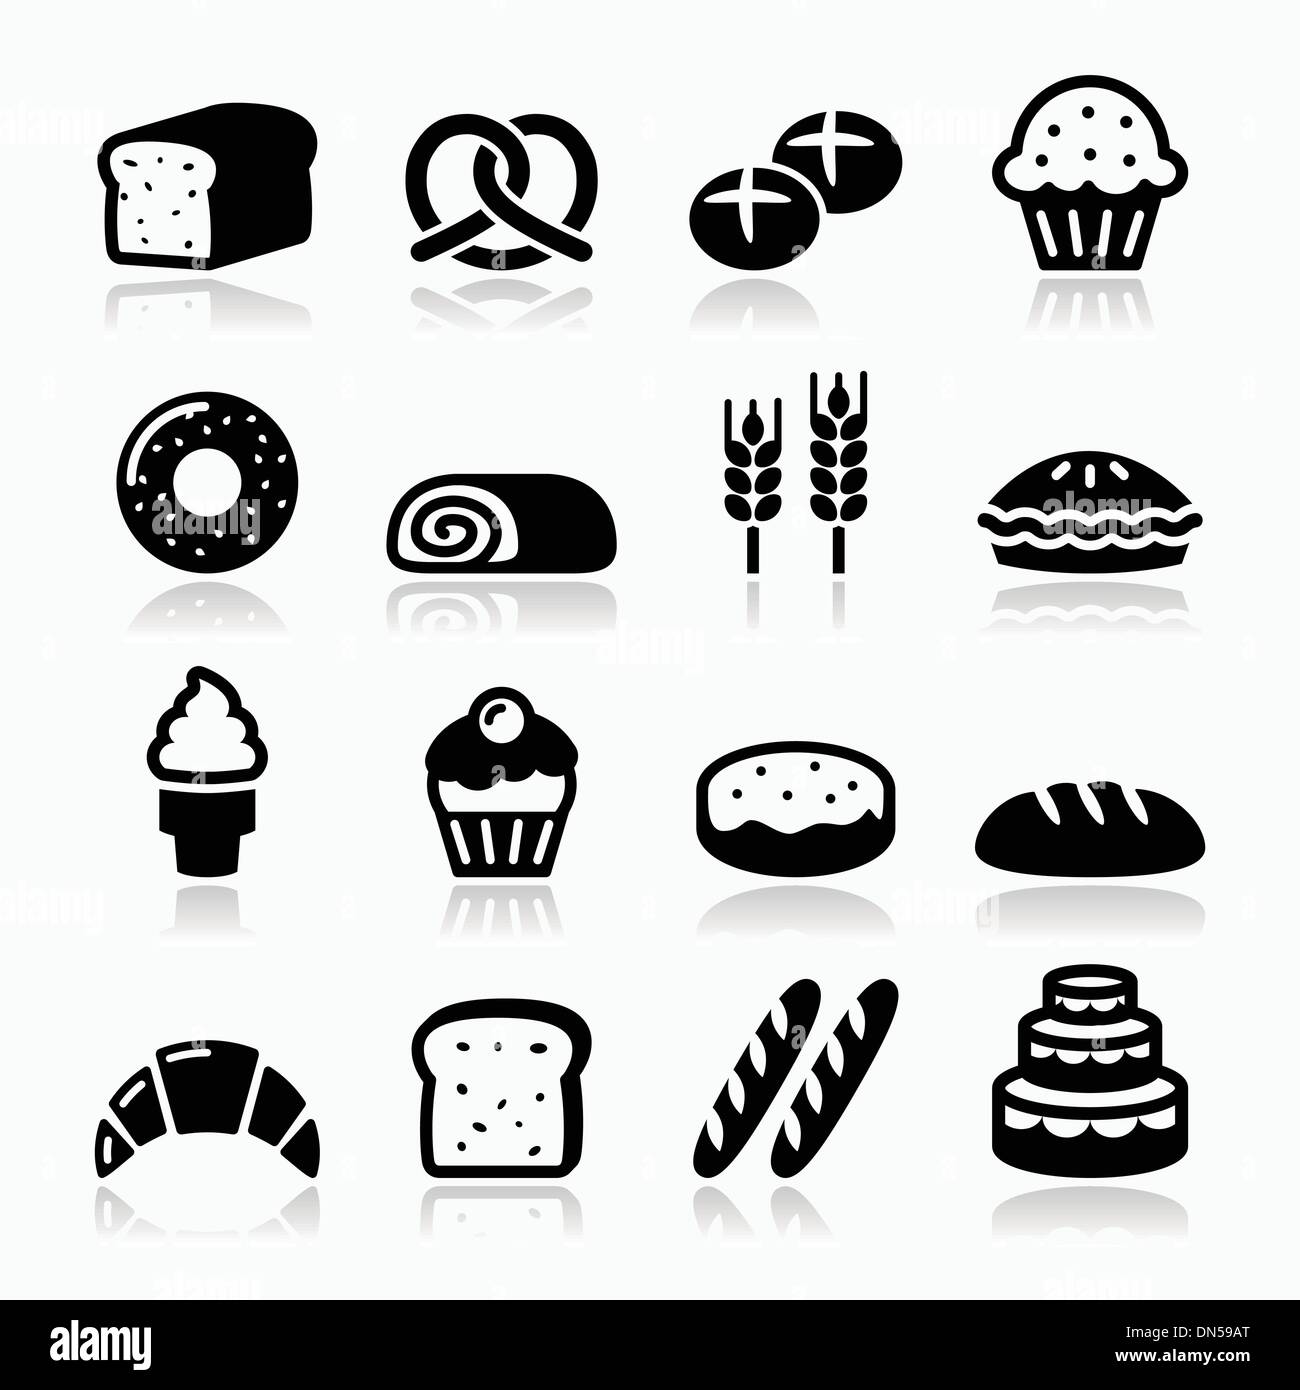 Bäckerei, Konditorei Icons Set - Krapfen, Kuchen, Brot, Kuchen Stock Vektor